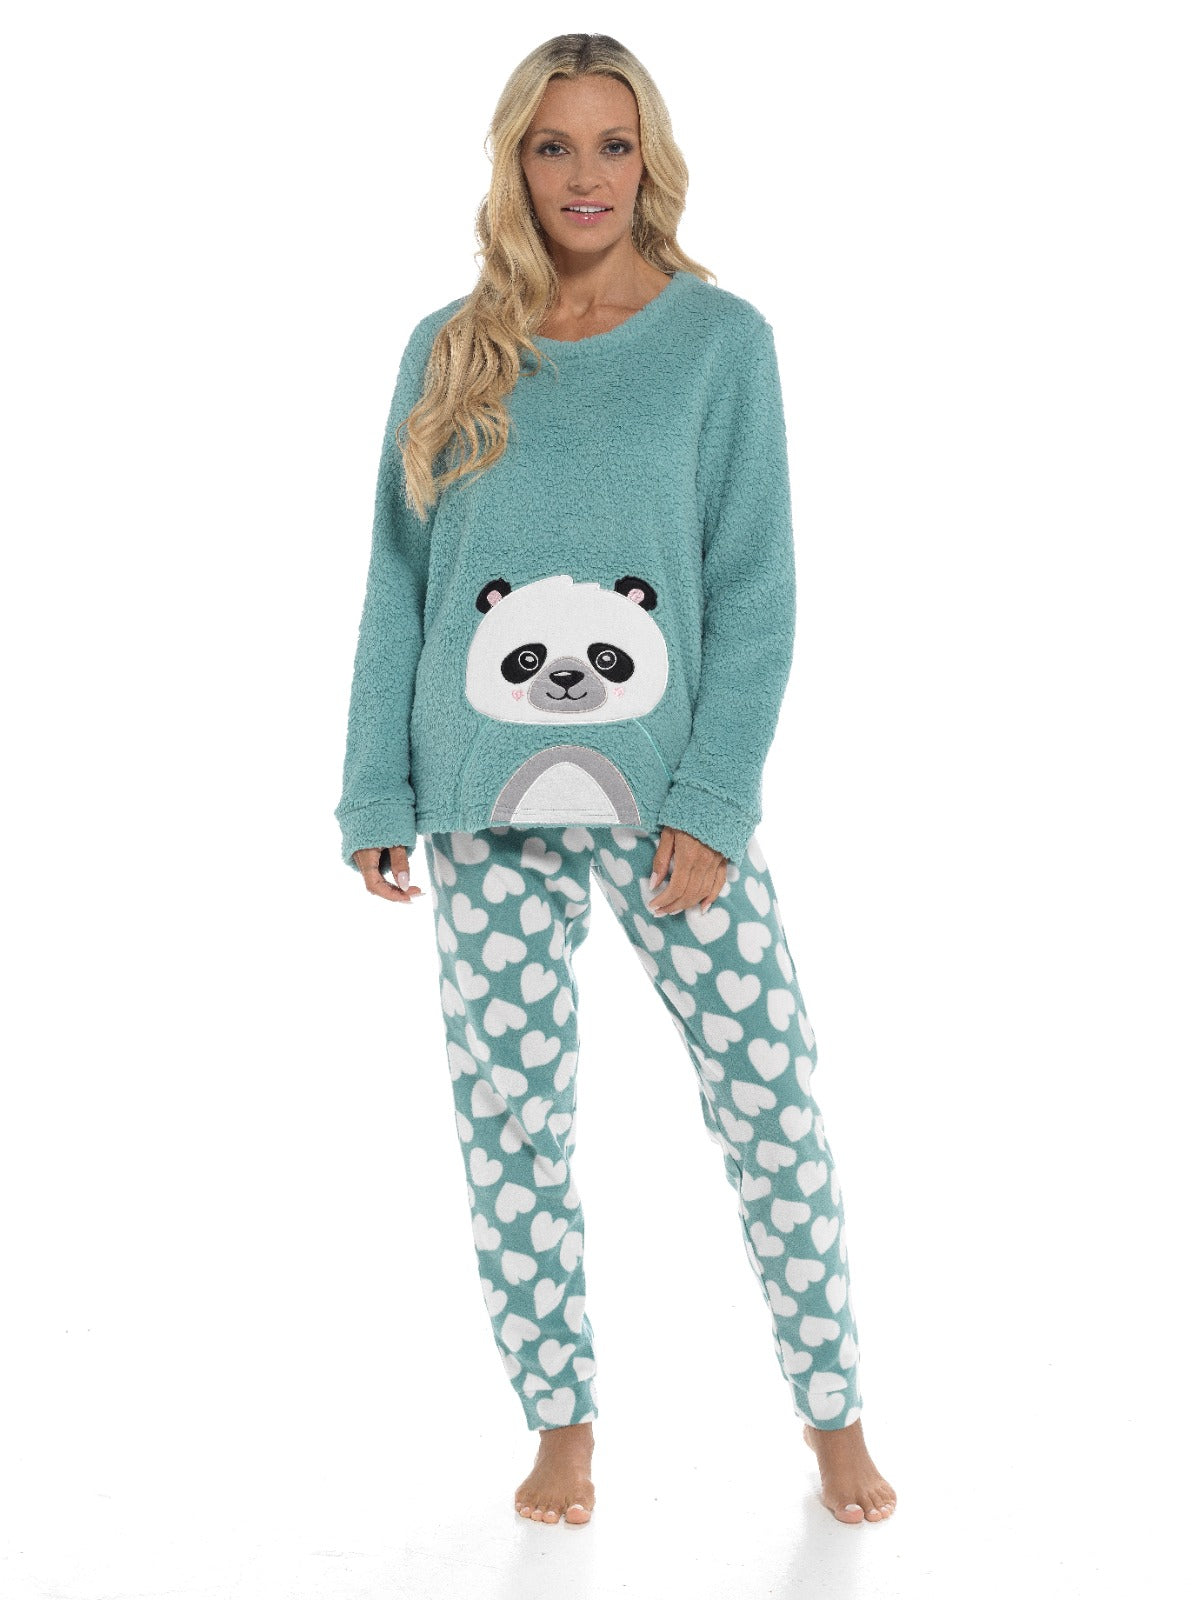 Women's Panda Snuggle Fleece Ladies Pyjama Set. Buy now for £20.00. A Pyjamas by Daisy Dreamer. 12-14, 16-18, 18-20, 20-22, daisy dreamer, duck egg, duckegg, embroidery, extra large, girls, green, gym, ladies, large, long sleeve, loungewear, medium, night